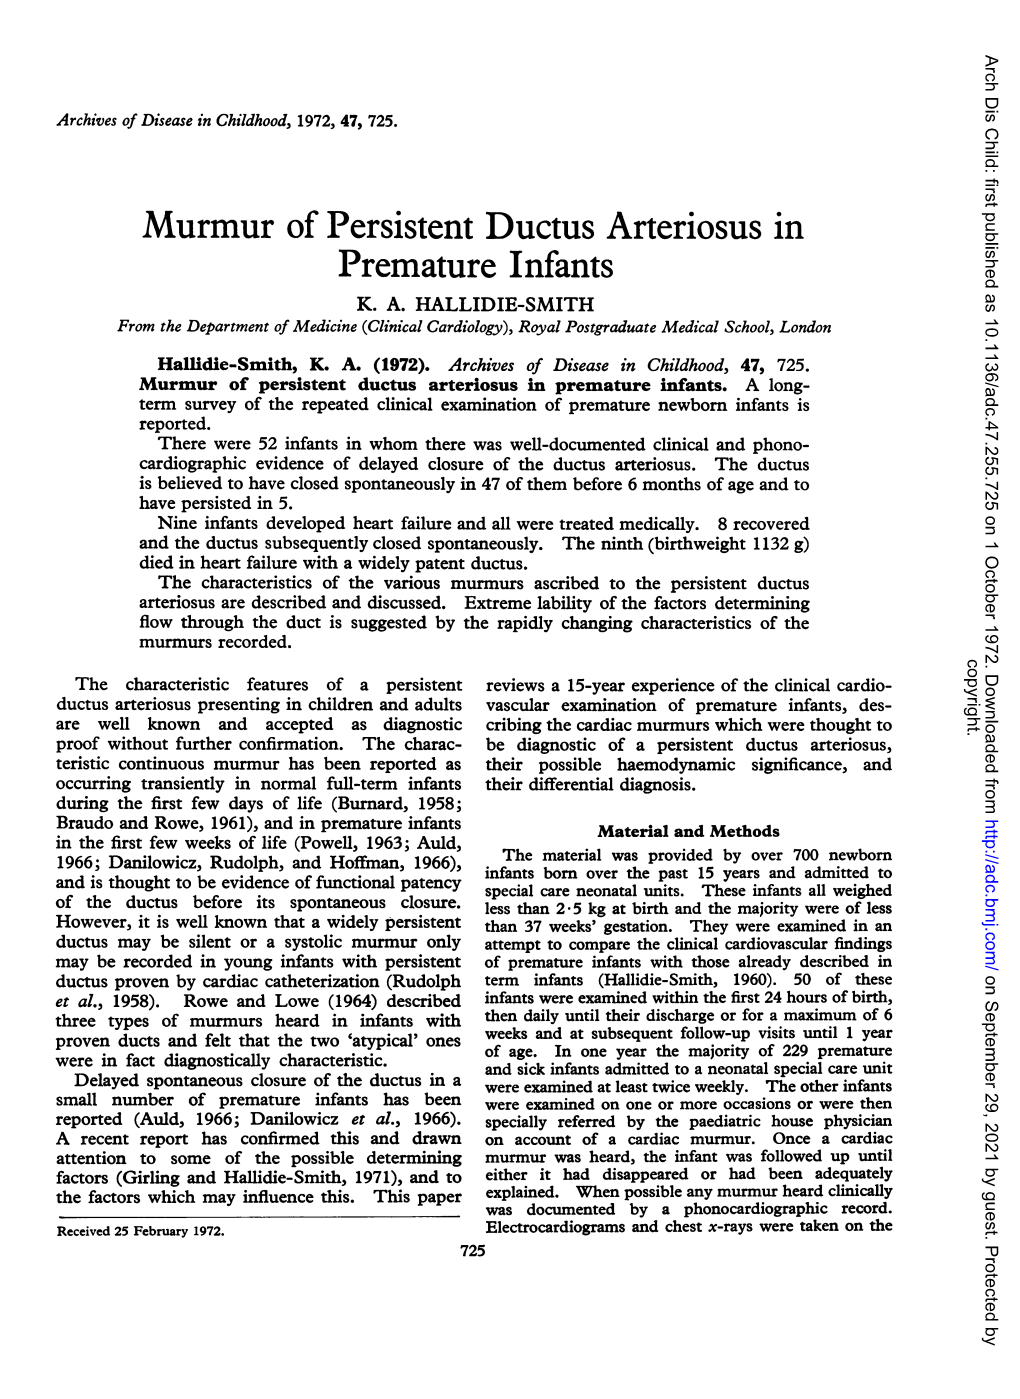 Murmur of Persistent Ductus Arteriosus in Premature Infants K